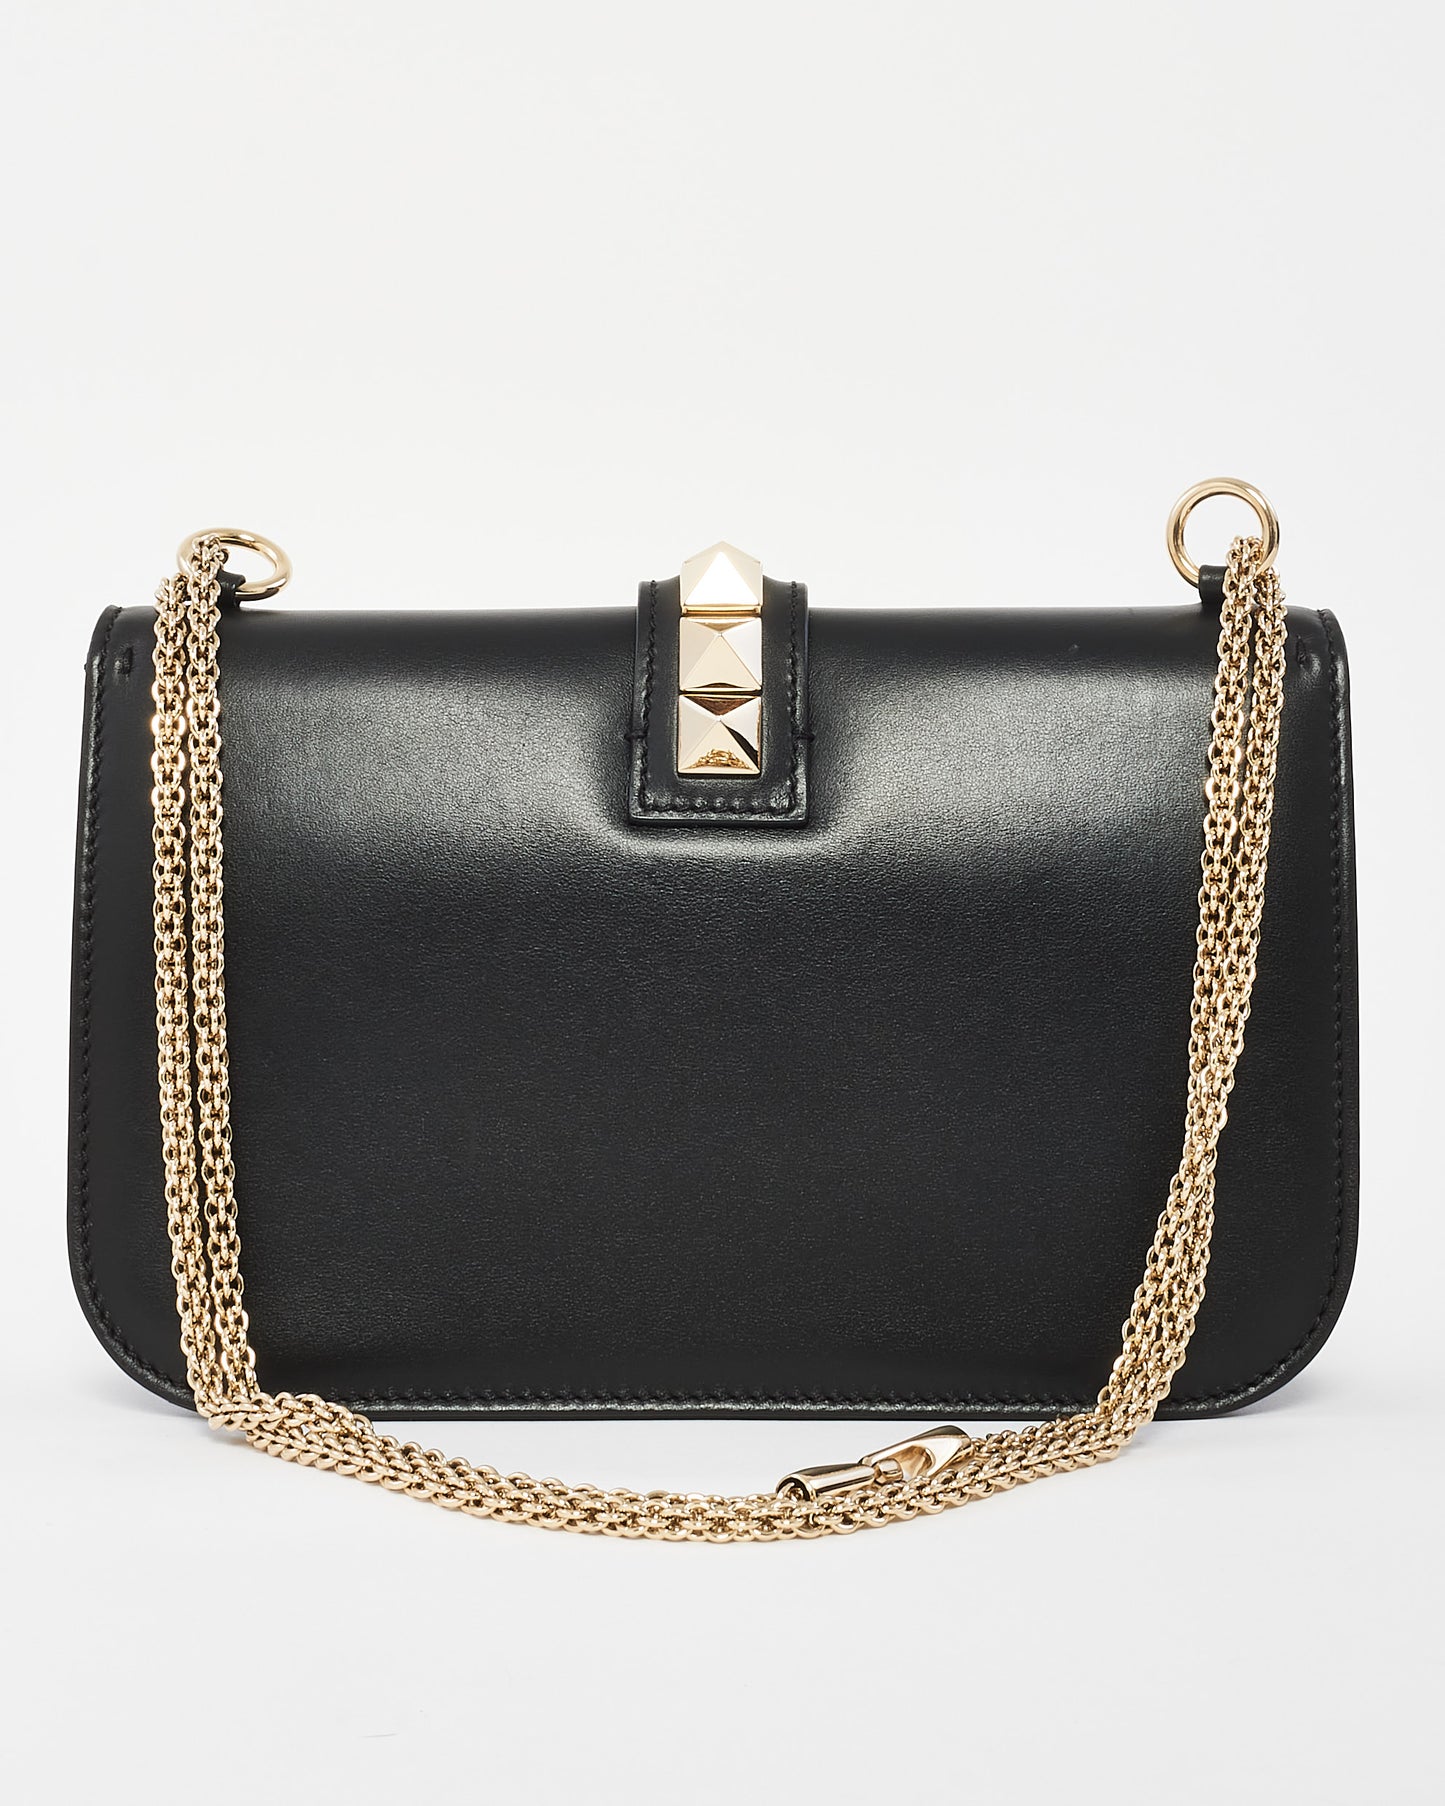 Valentino Black Leather Glam Lock Rockstud Small Shoulder Bag